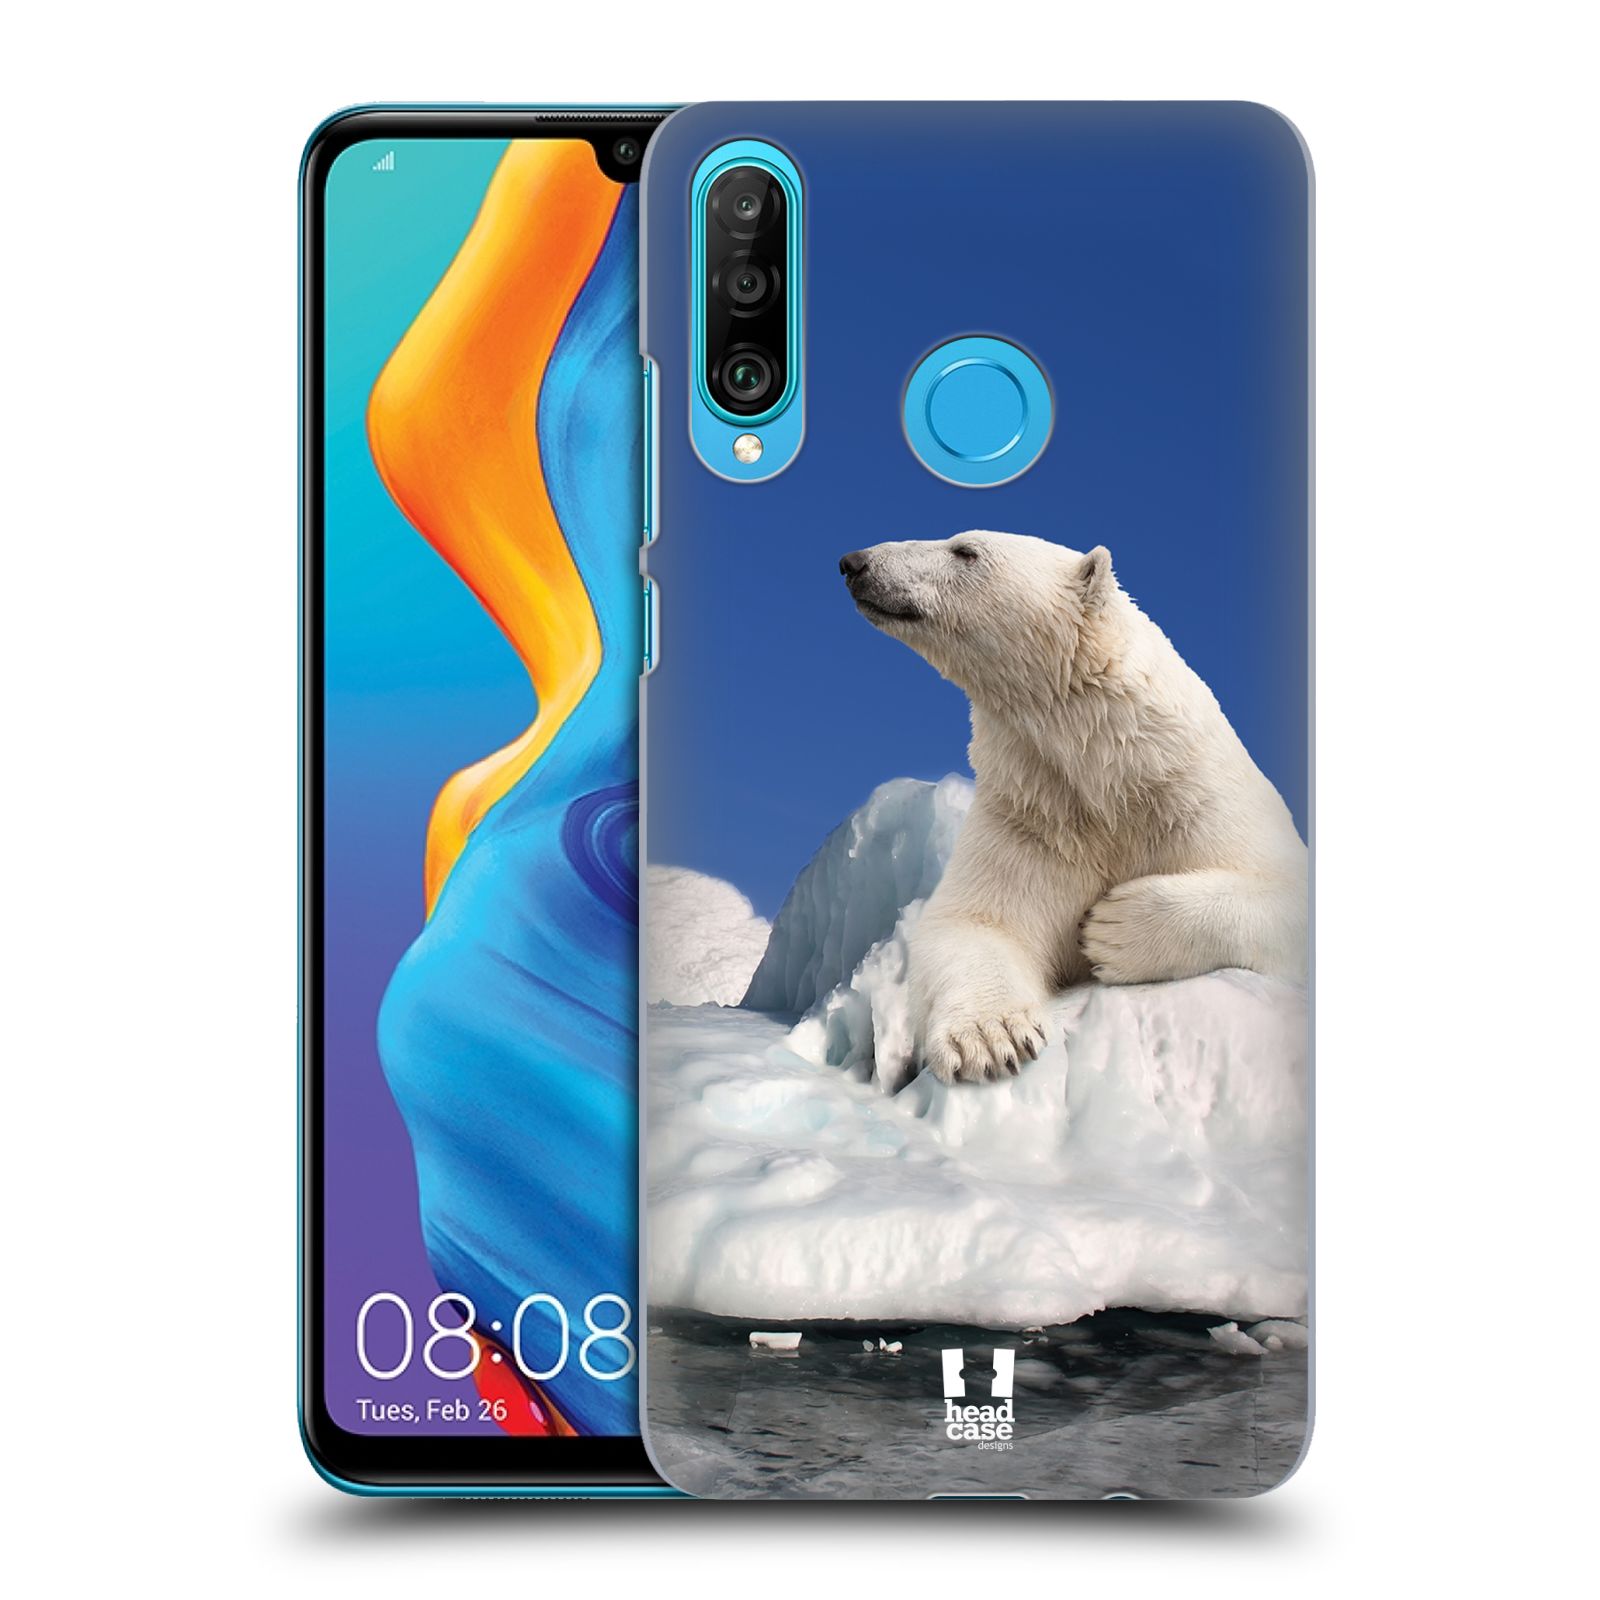 Pouzdro na mobil Huawei P30 LITE - HEAD CASE - vzor Divočina, Divoký život a zvířata foto LEDNÍ MEDVĚD NA LEDOVCI A NEBE MODRÁ